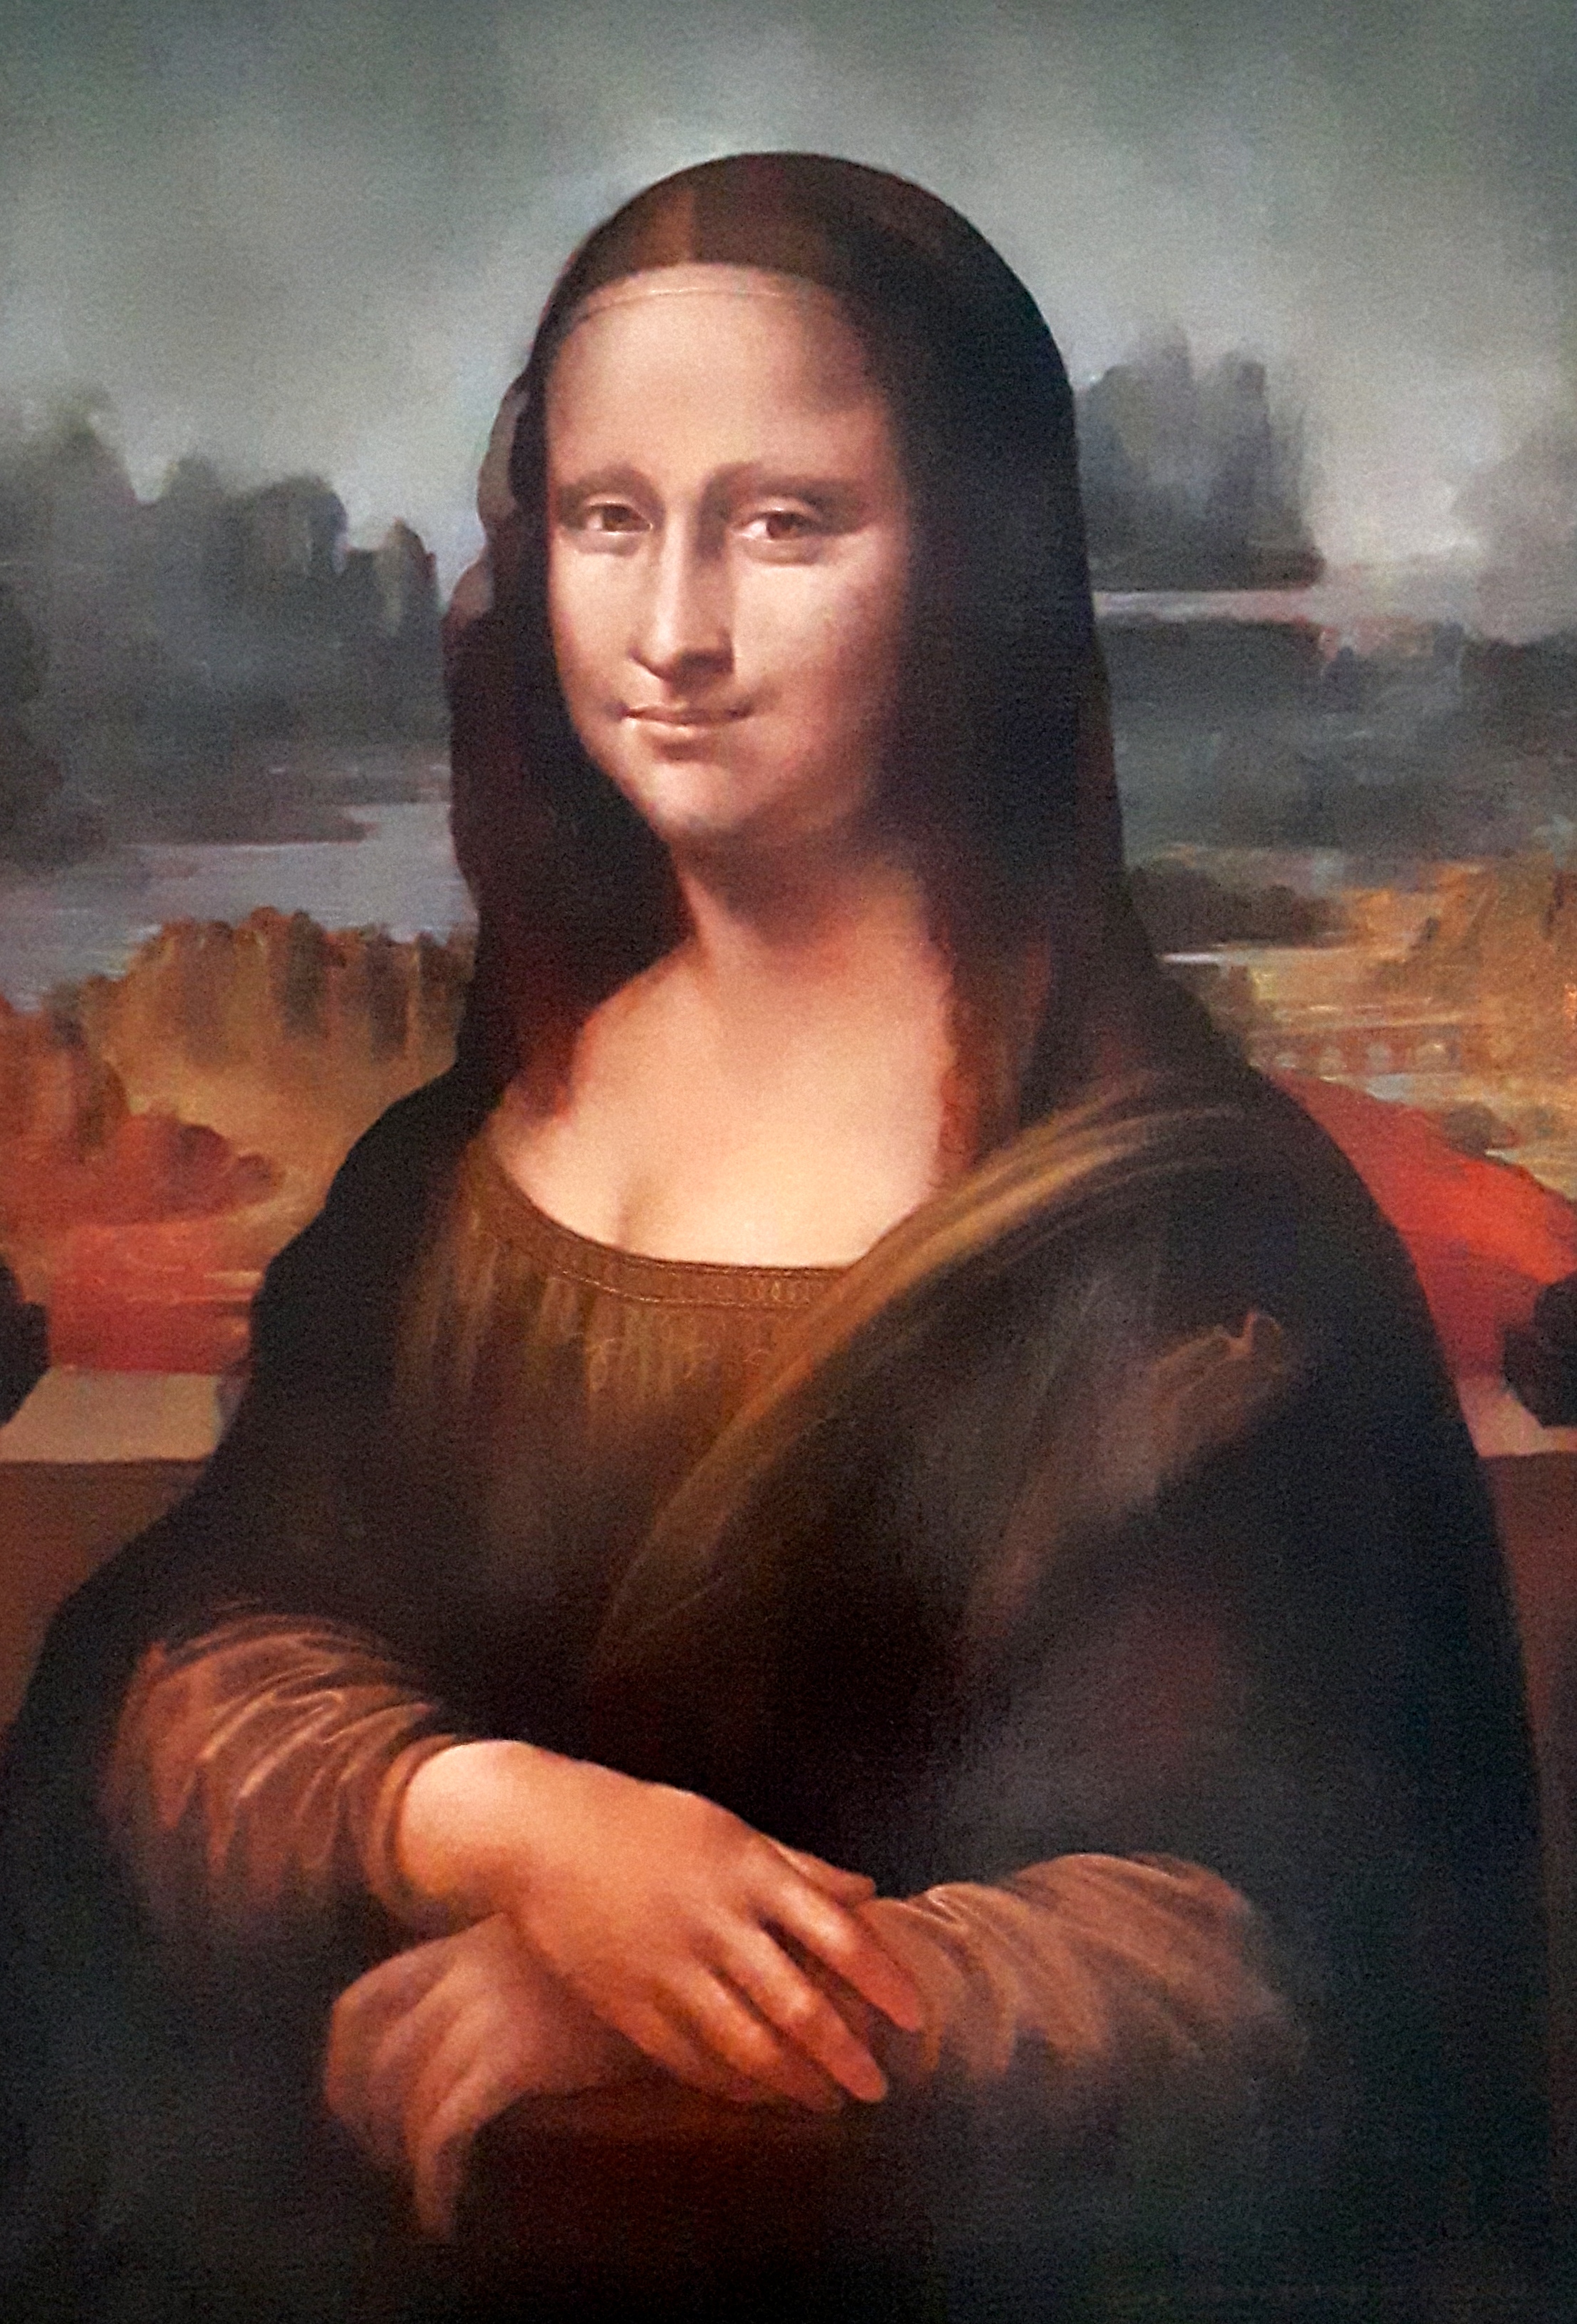 Mona Lisa by GEORGI Danevski, 2017 after da Vinci 1504-05. Dialogue with Great Masters Series.